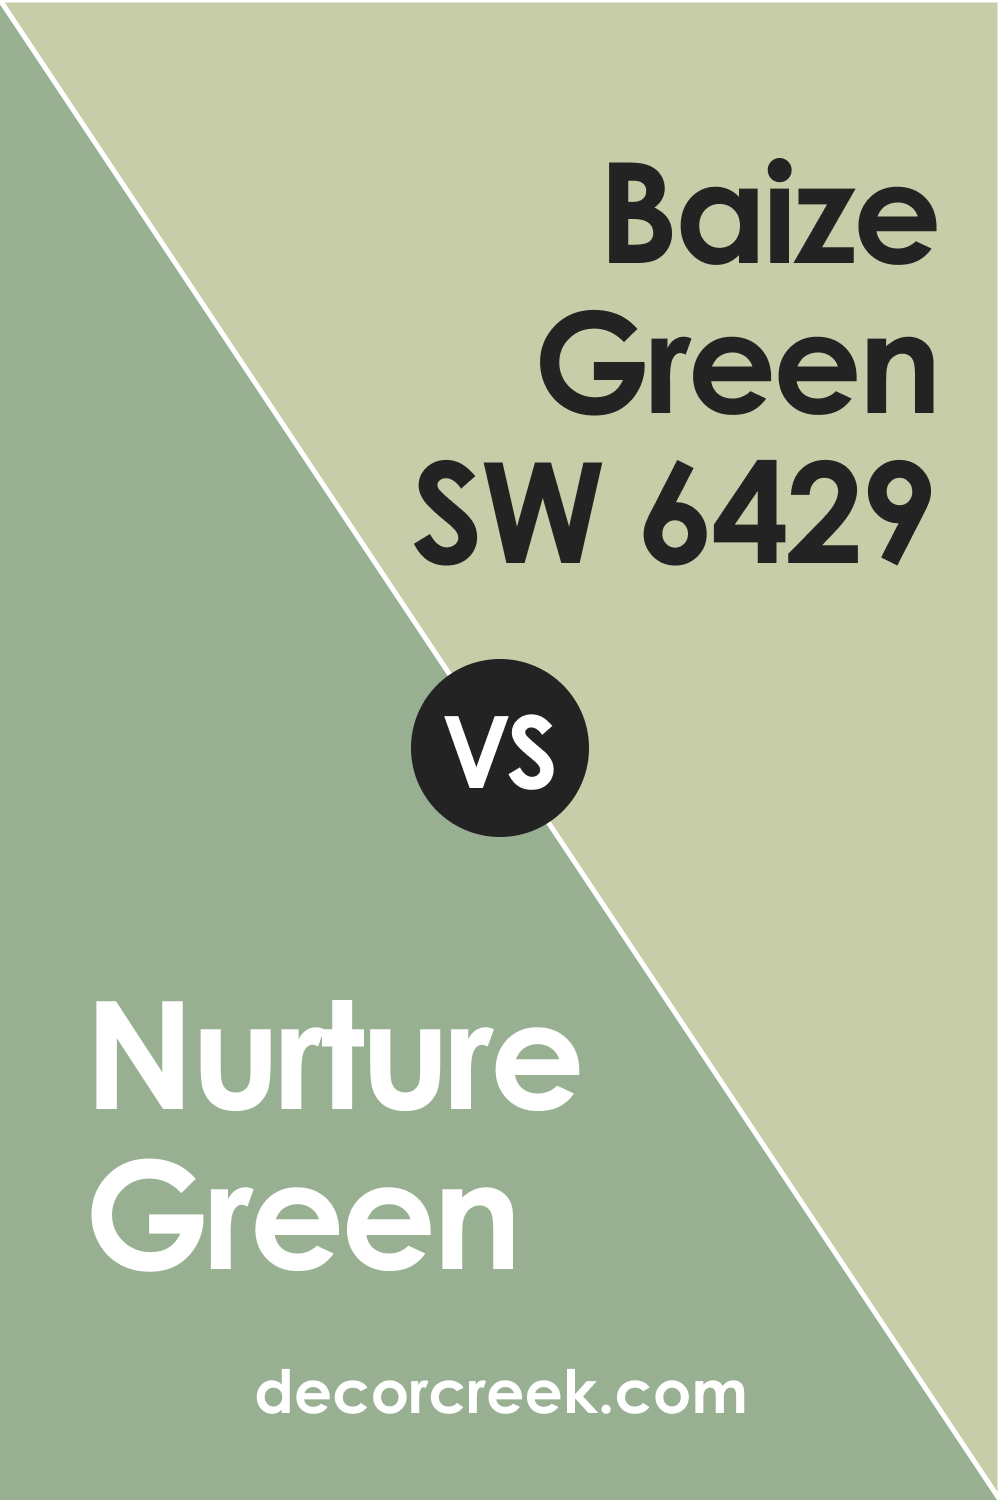 Nurture Green vs Baize Green